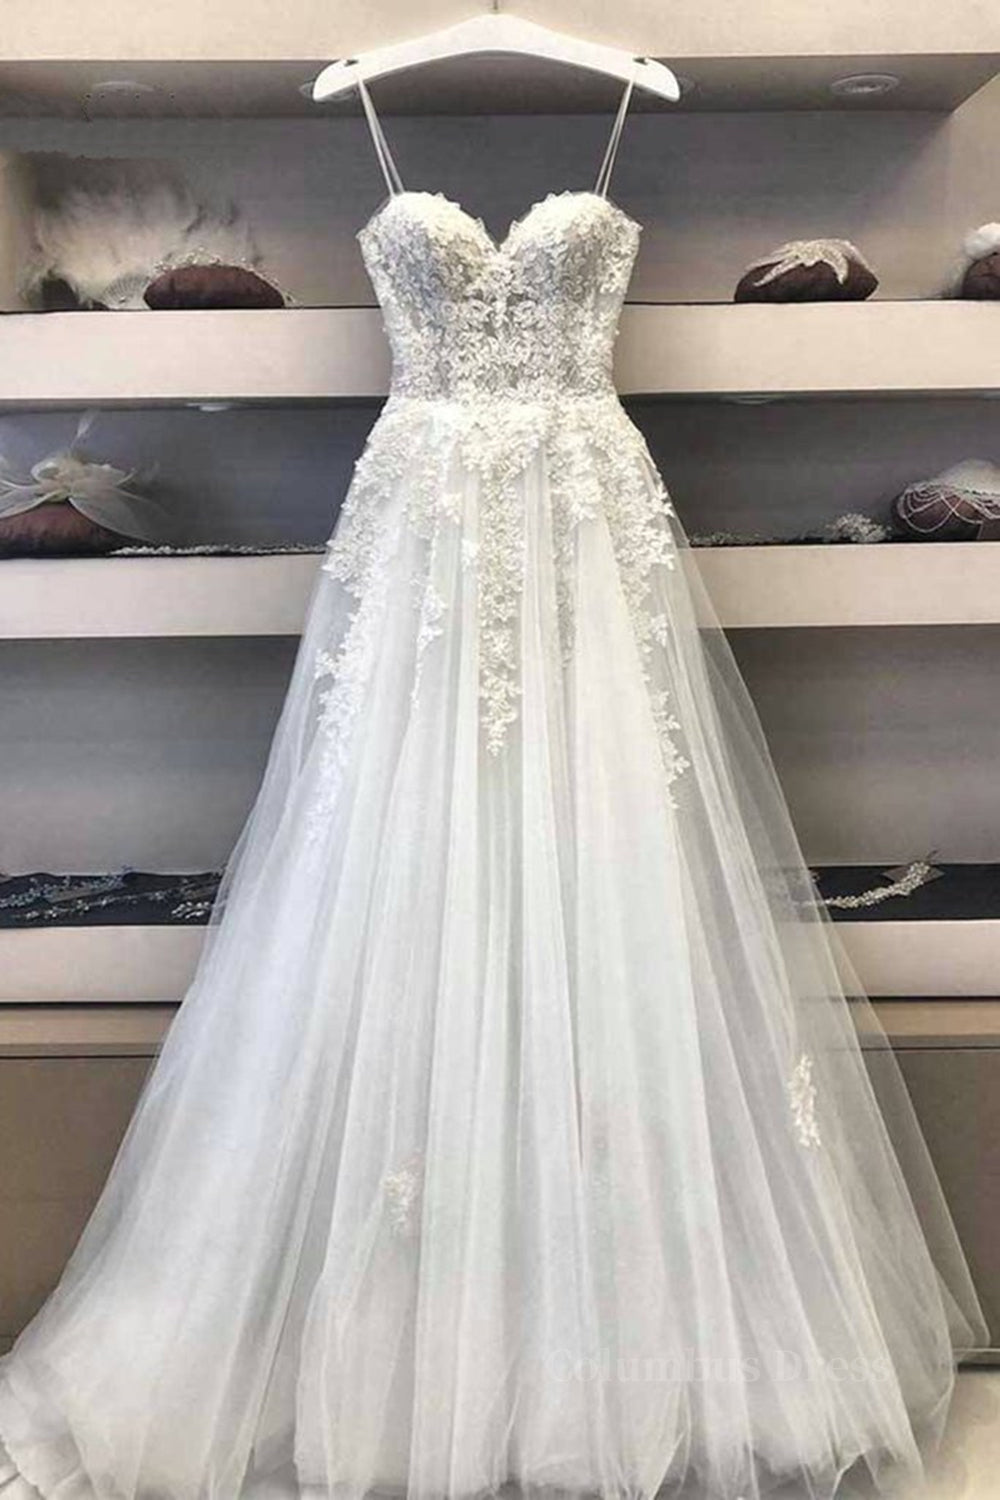 Princess Sweetheart Neck White Lace Corset Prom Corset Wedding Dresses, Ivory Lace Corset Formal Dresses, White Evening Dresses outfit, Wedding Dress Under 500